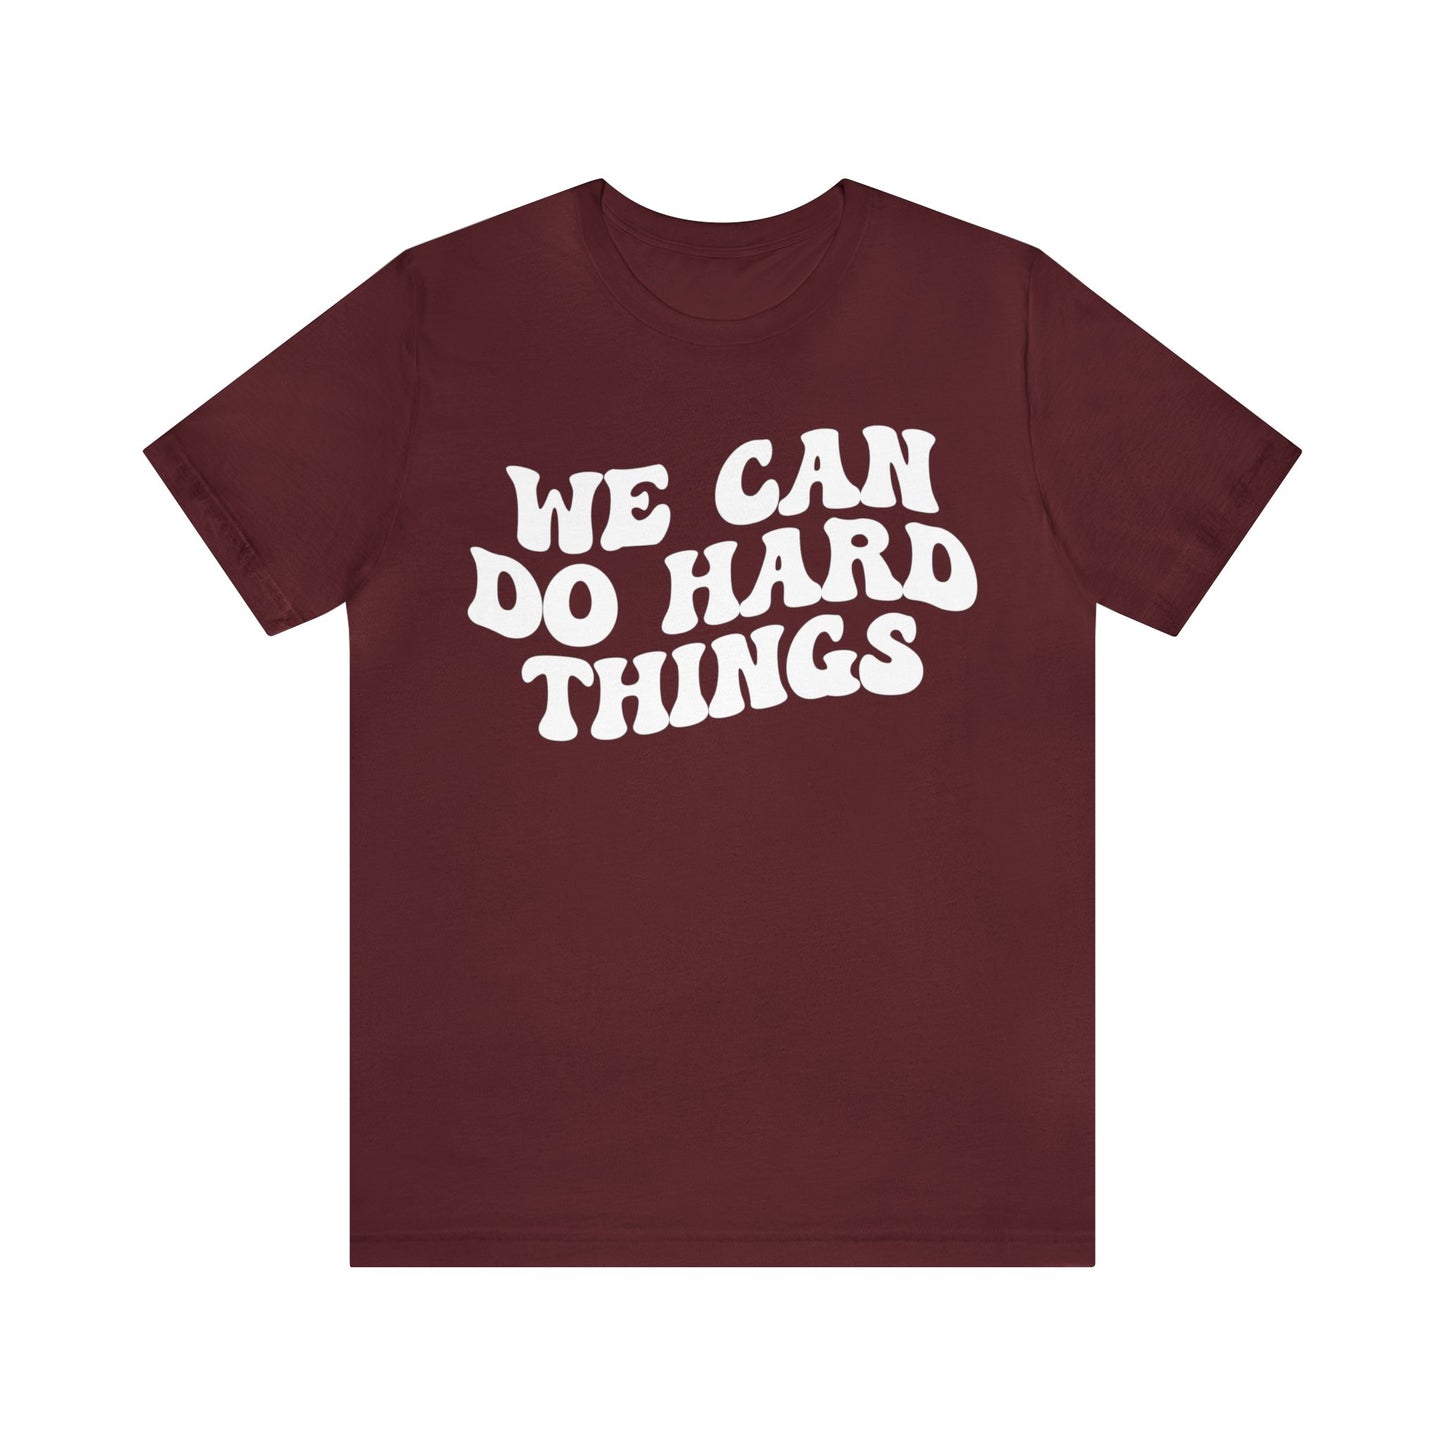 We Can Do Hard Things Shirt, Take a Risk Shirt, Strive Hard, State Testing Shirt, Aim High, Soar High, Inspirational Shirt for Women, T1468